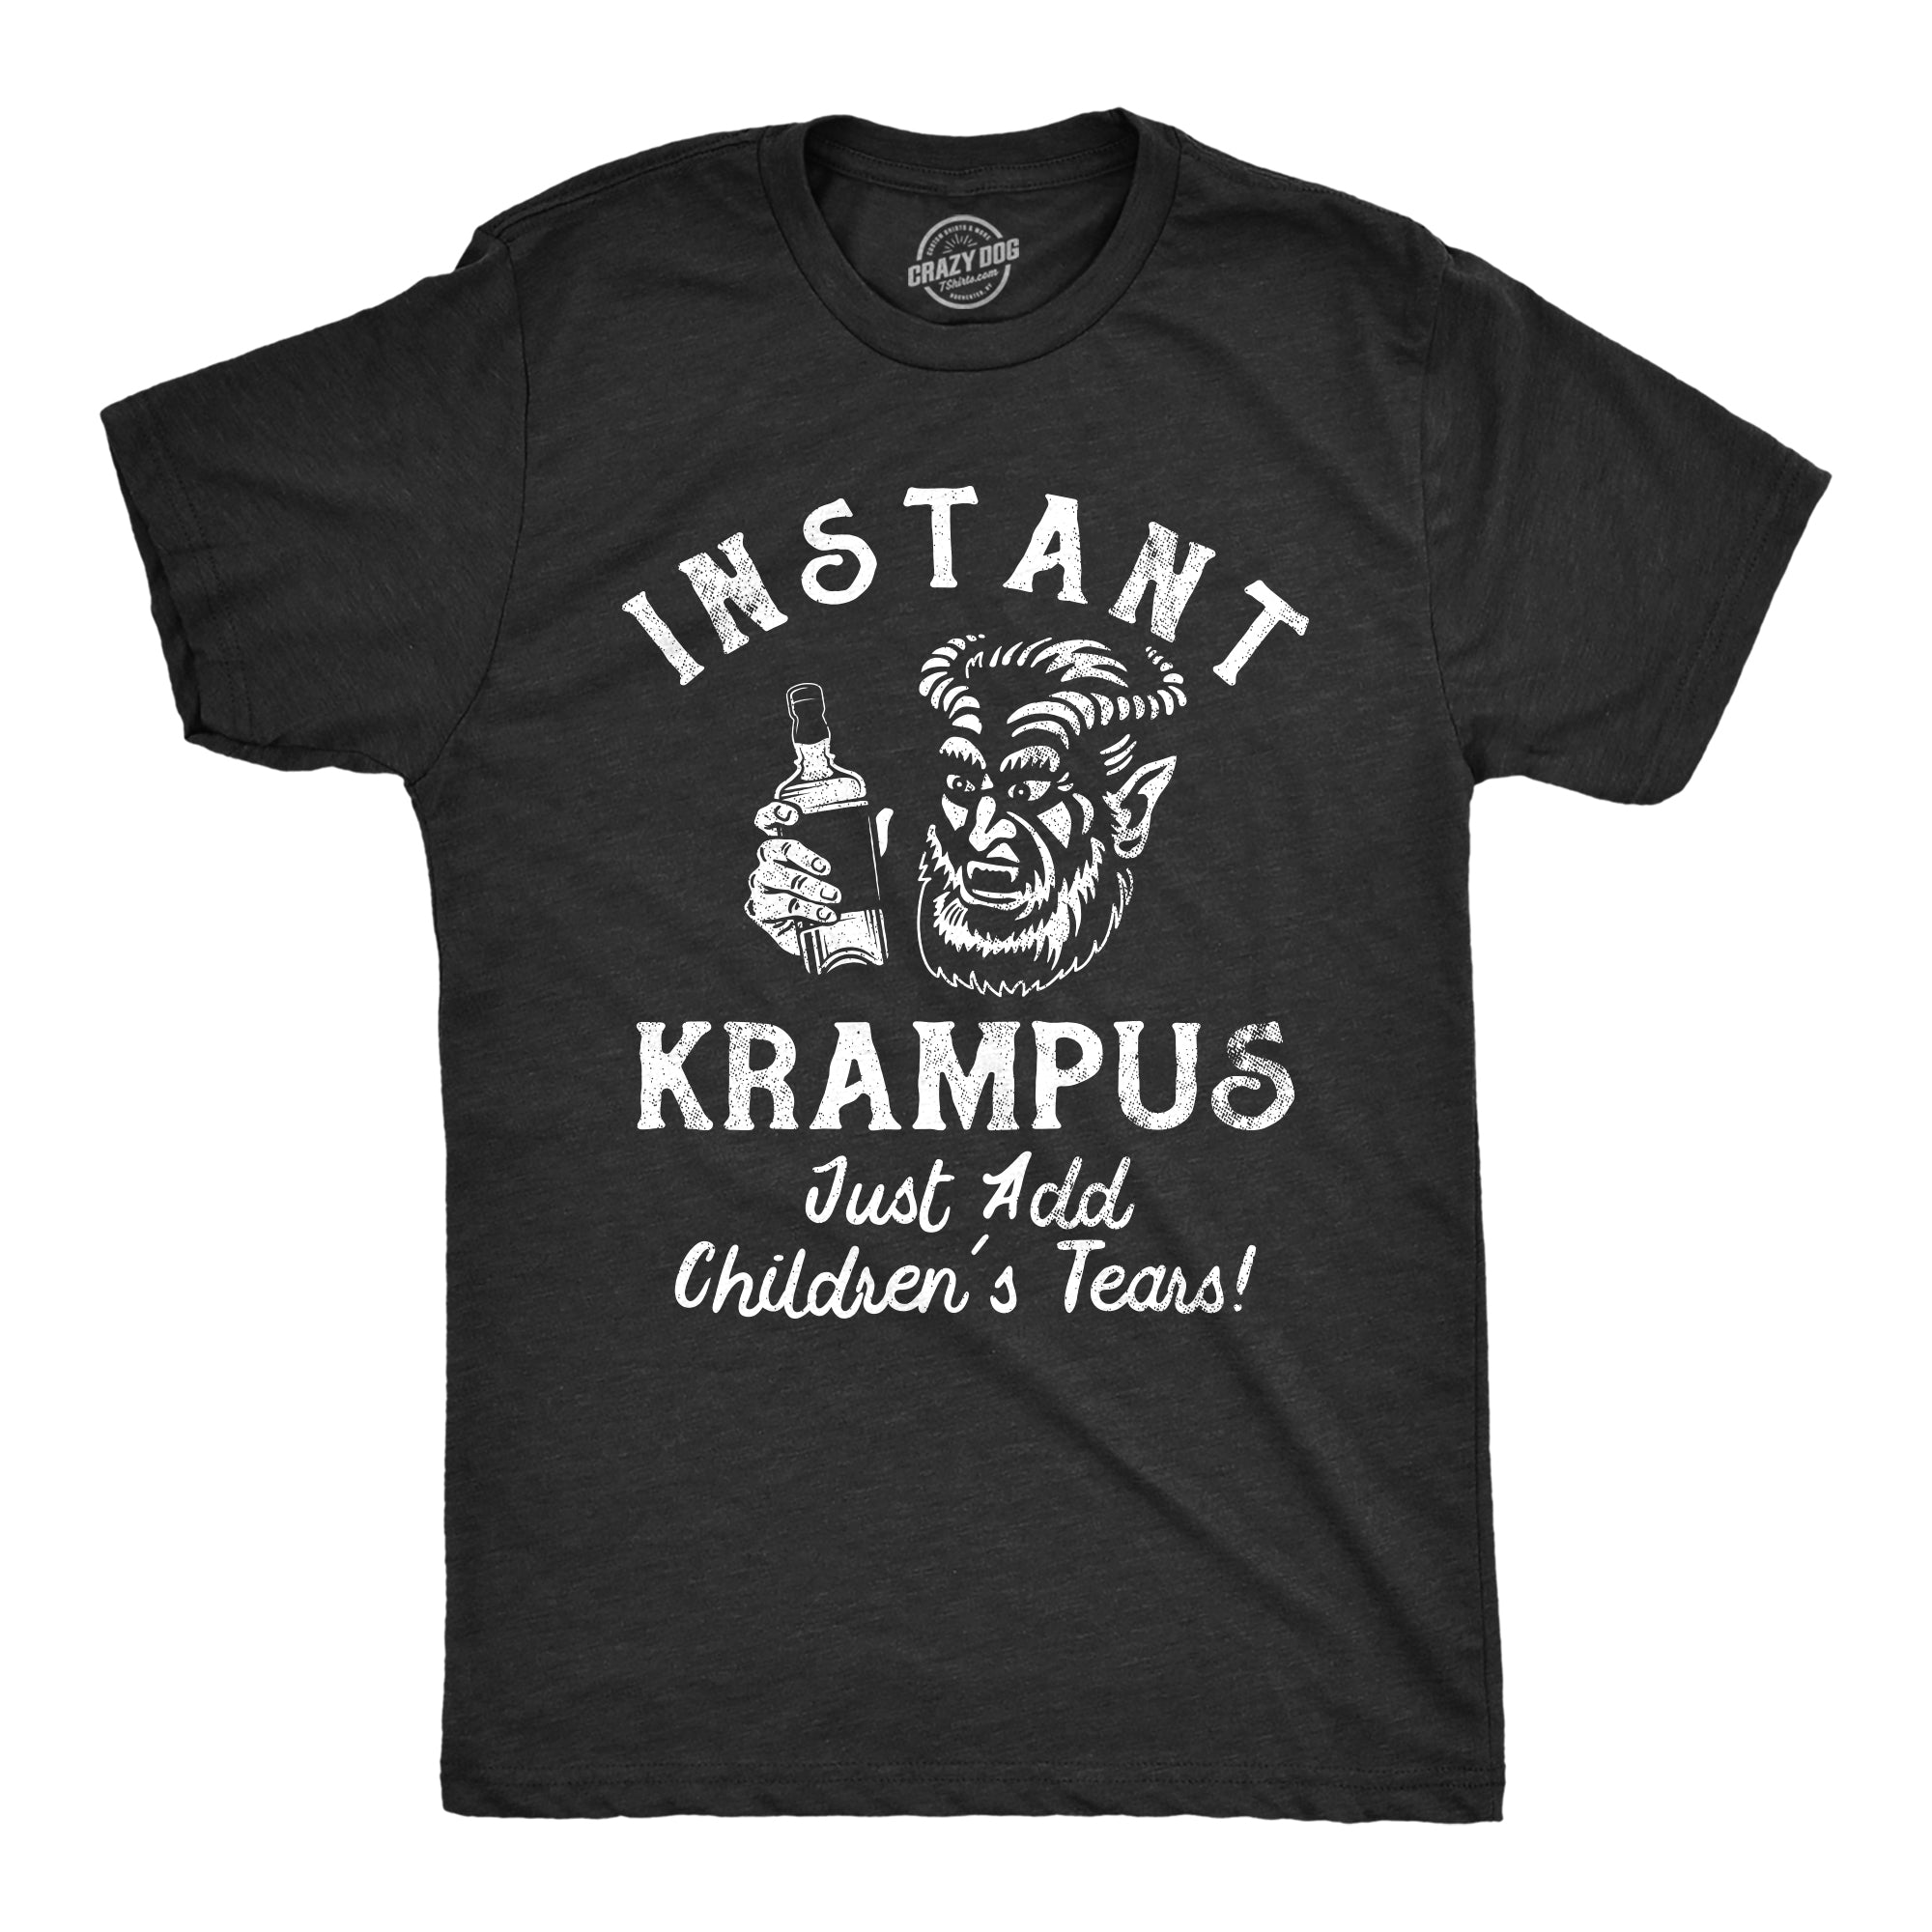 Funny Heather Black - INSTANTKRAMPUS Instant Krampus Just Add Childrens Tears Mens T Shirt Nerdy Christmas sarcastic Tee